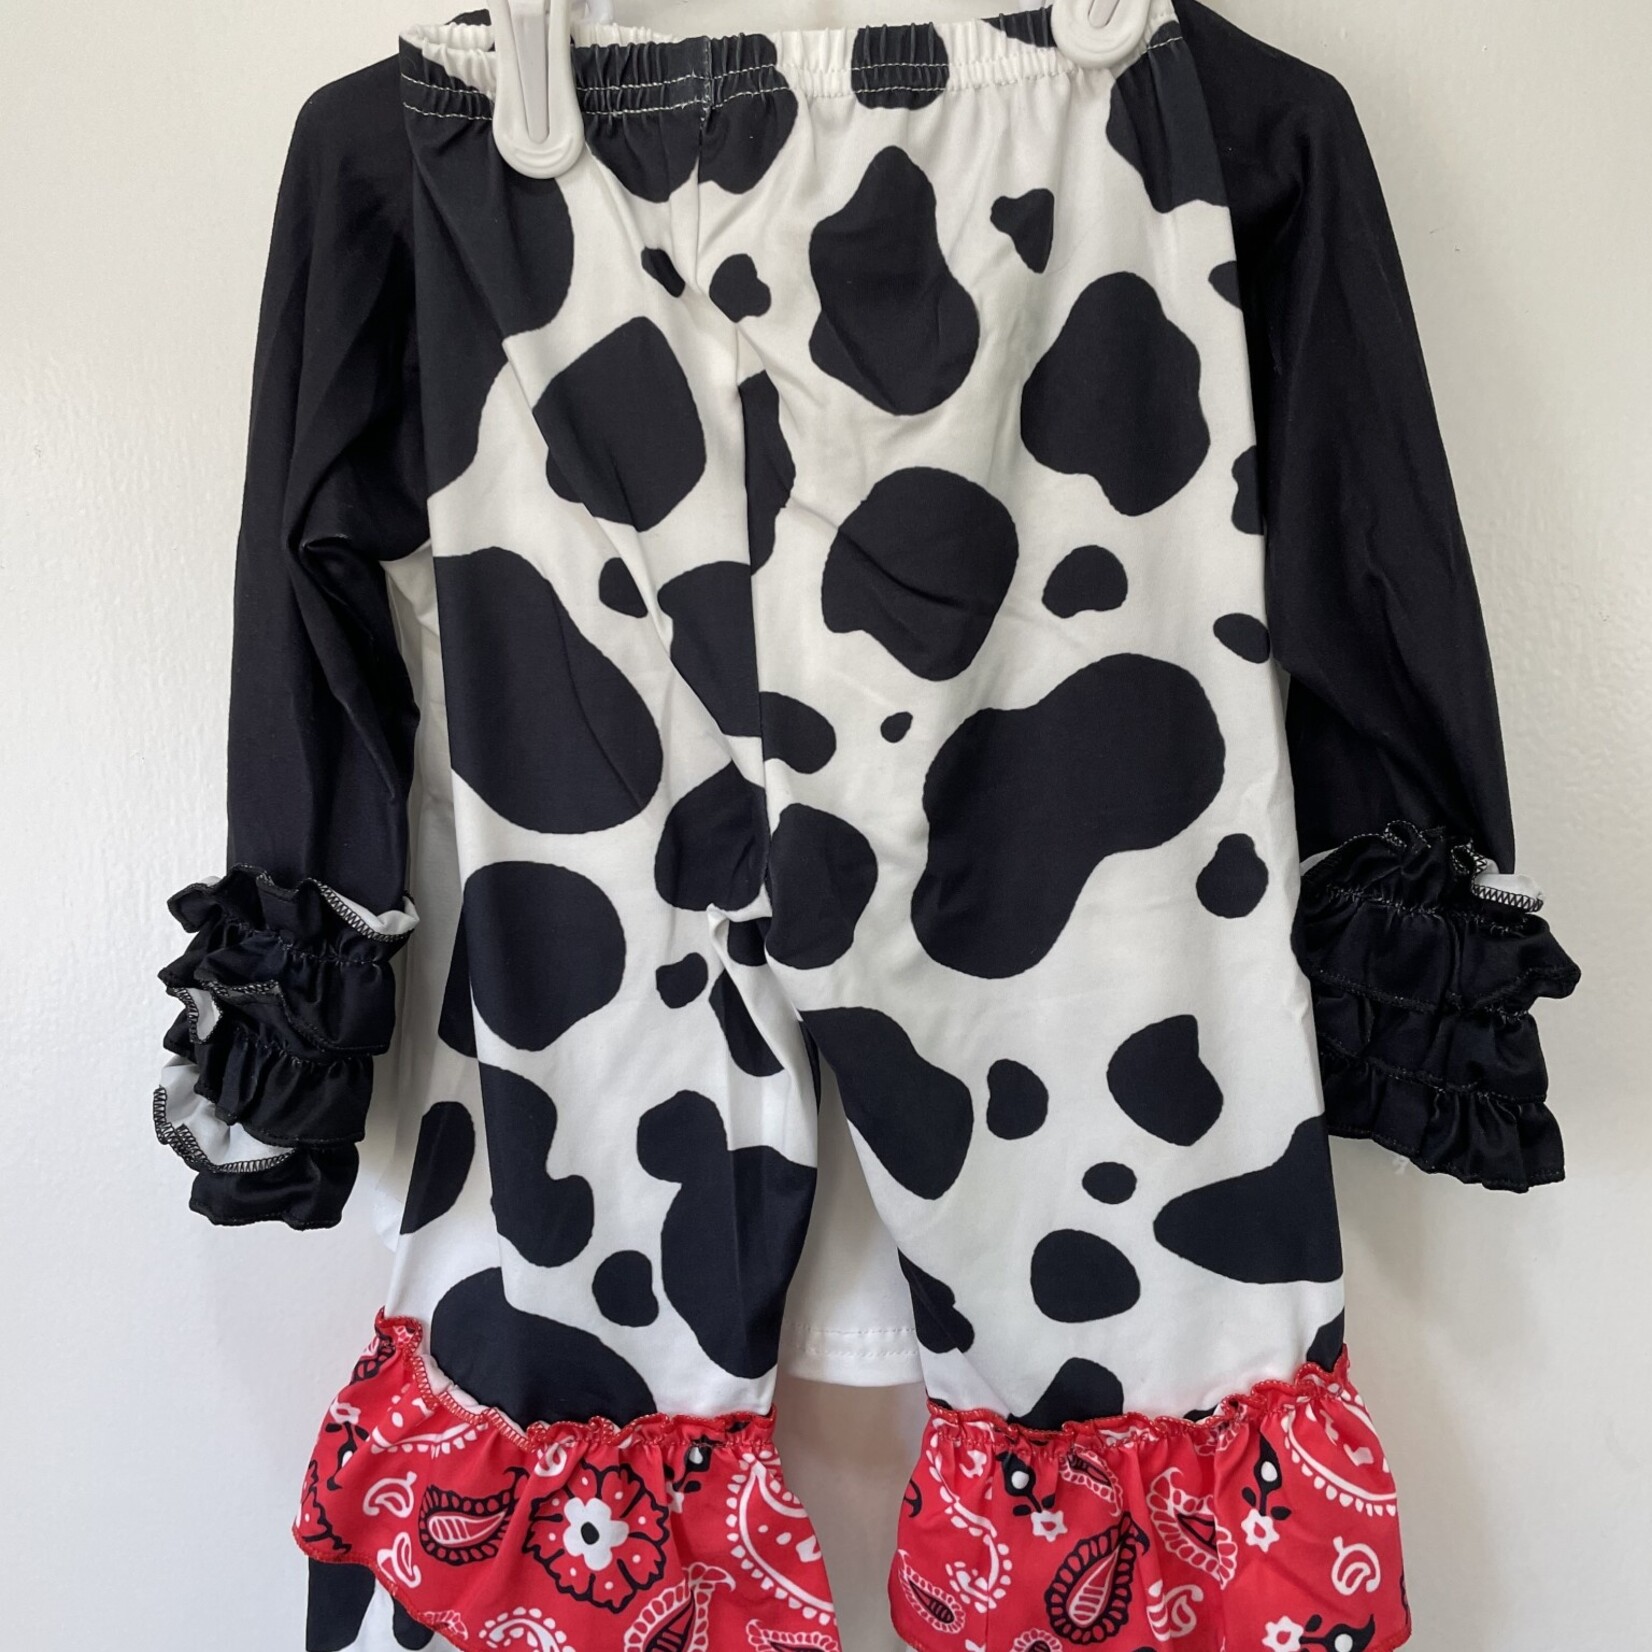 Yawoo Garments Peace Love Cows w/ ruffle pants set